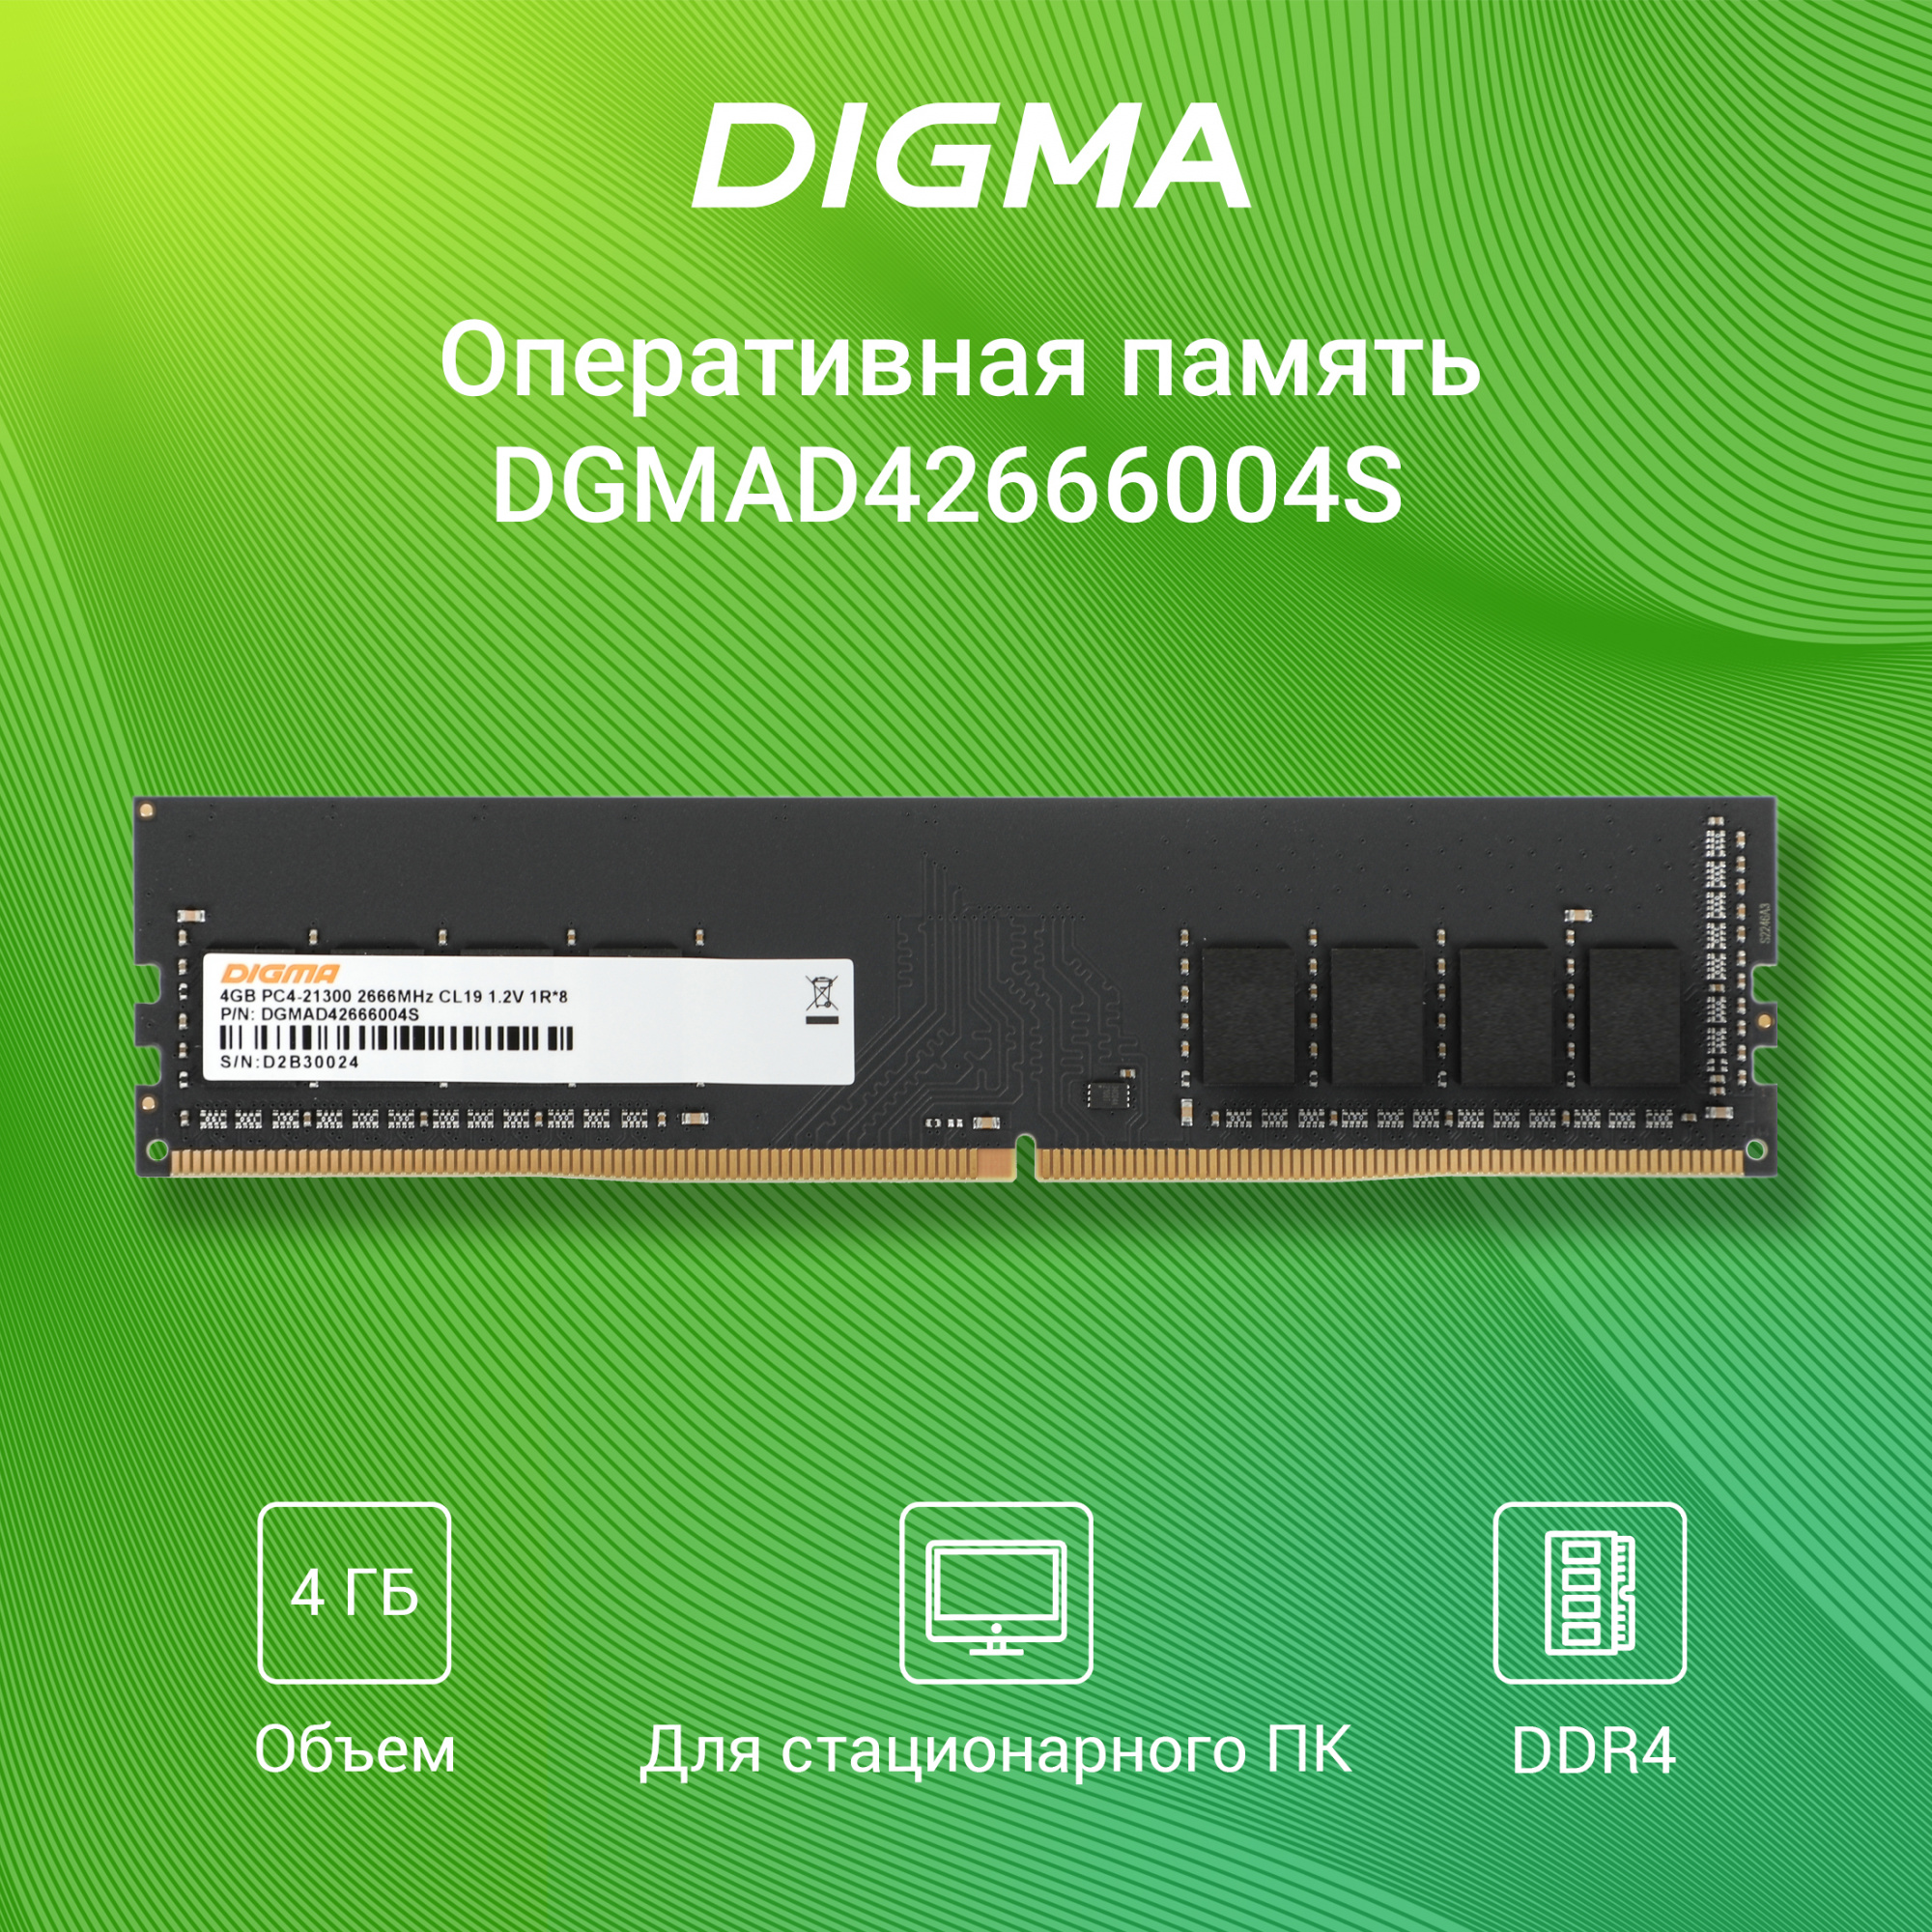   Digma DGMAD42666004S DDR4 -  1x 4 2666, DIMM,  Ret